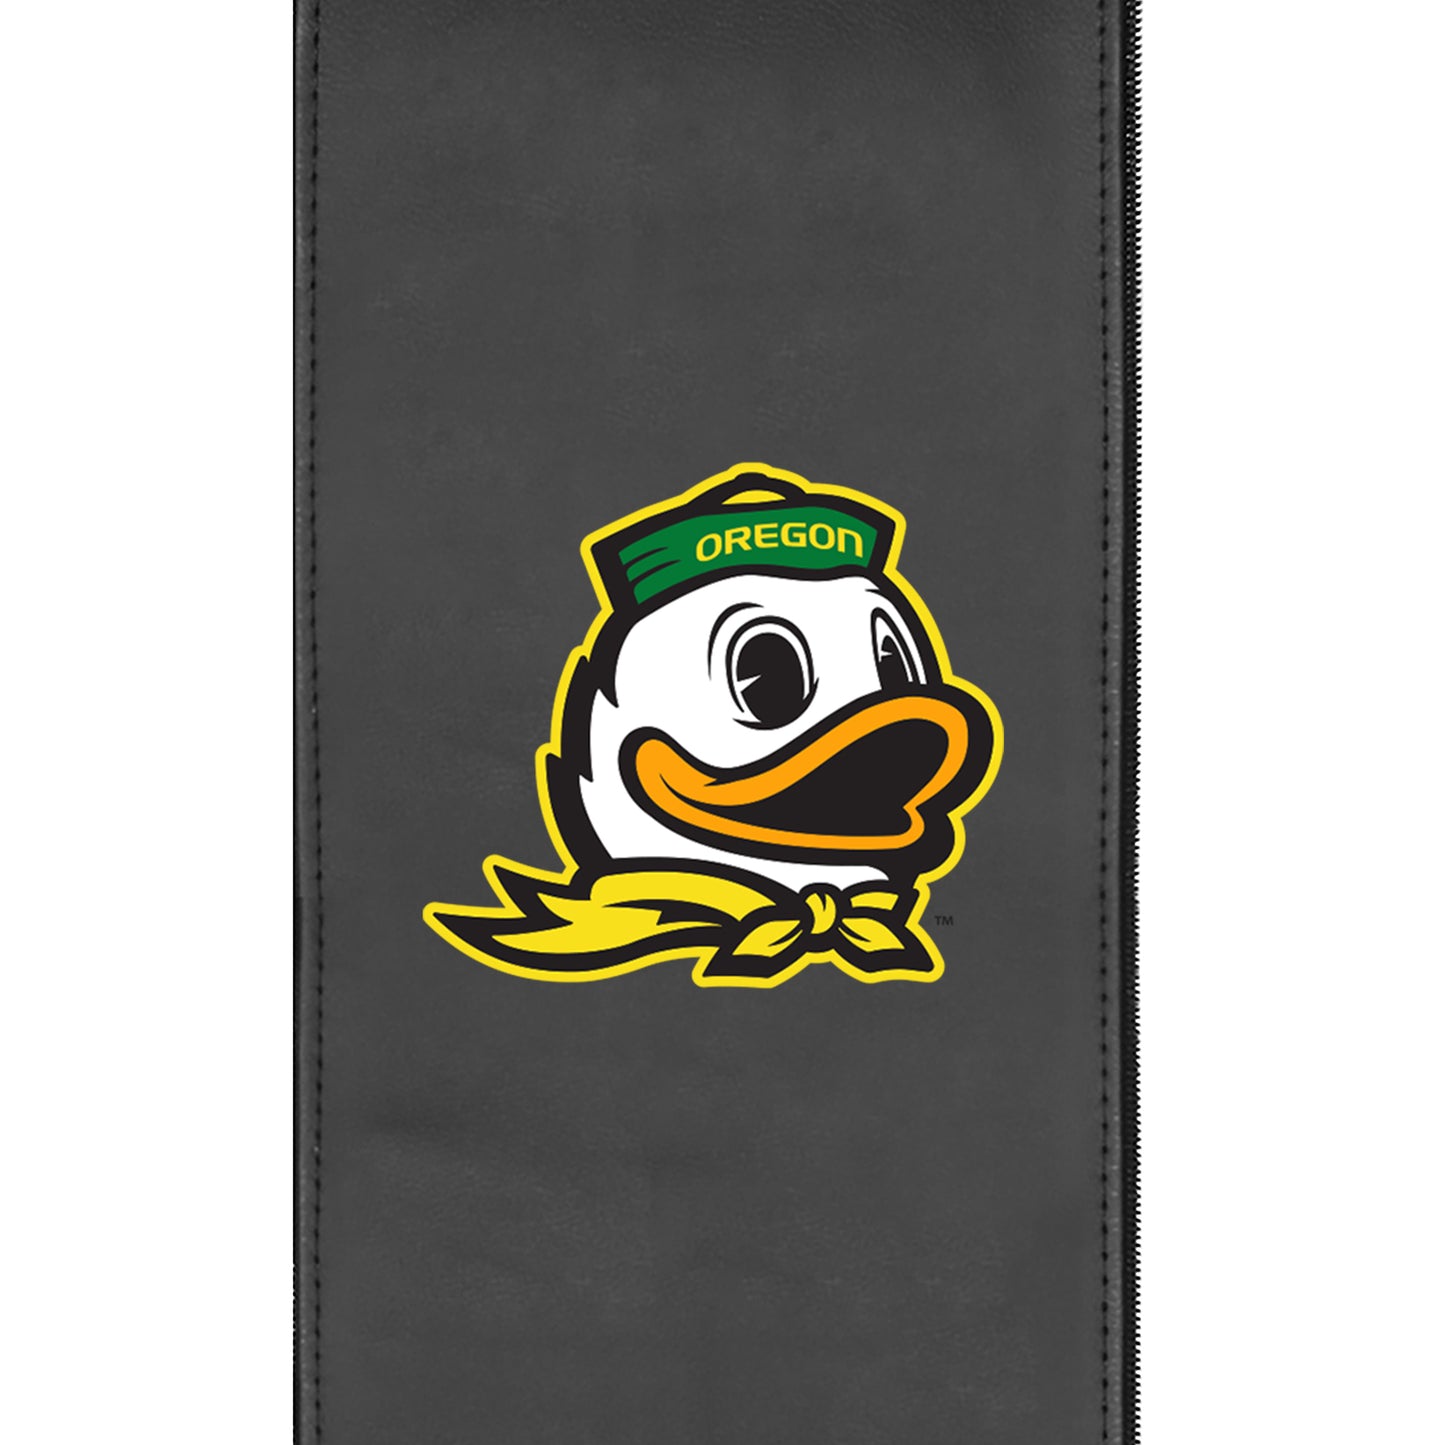 Bar Stool 500 with Oregon Ducks Mascot Logo Set of 2